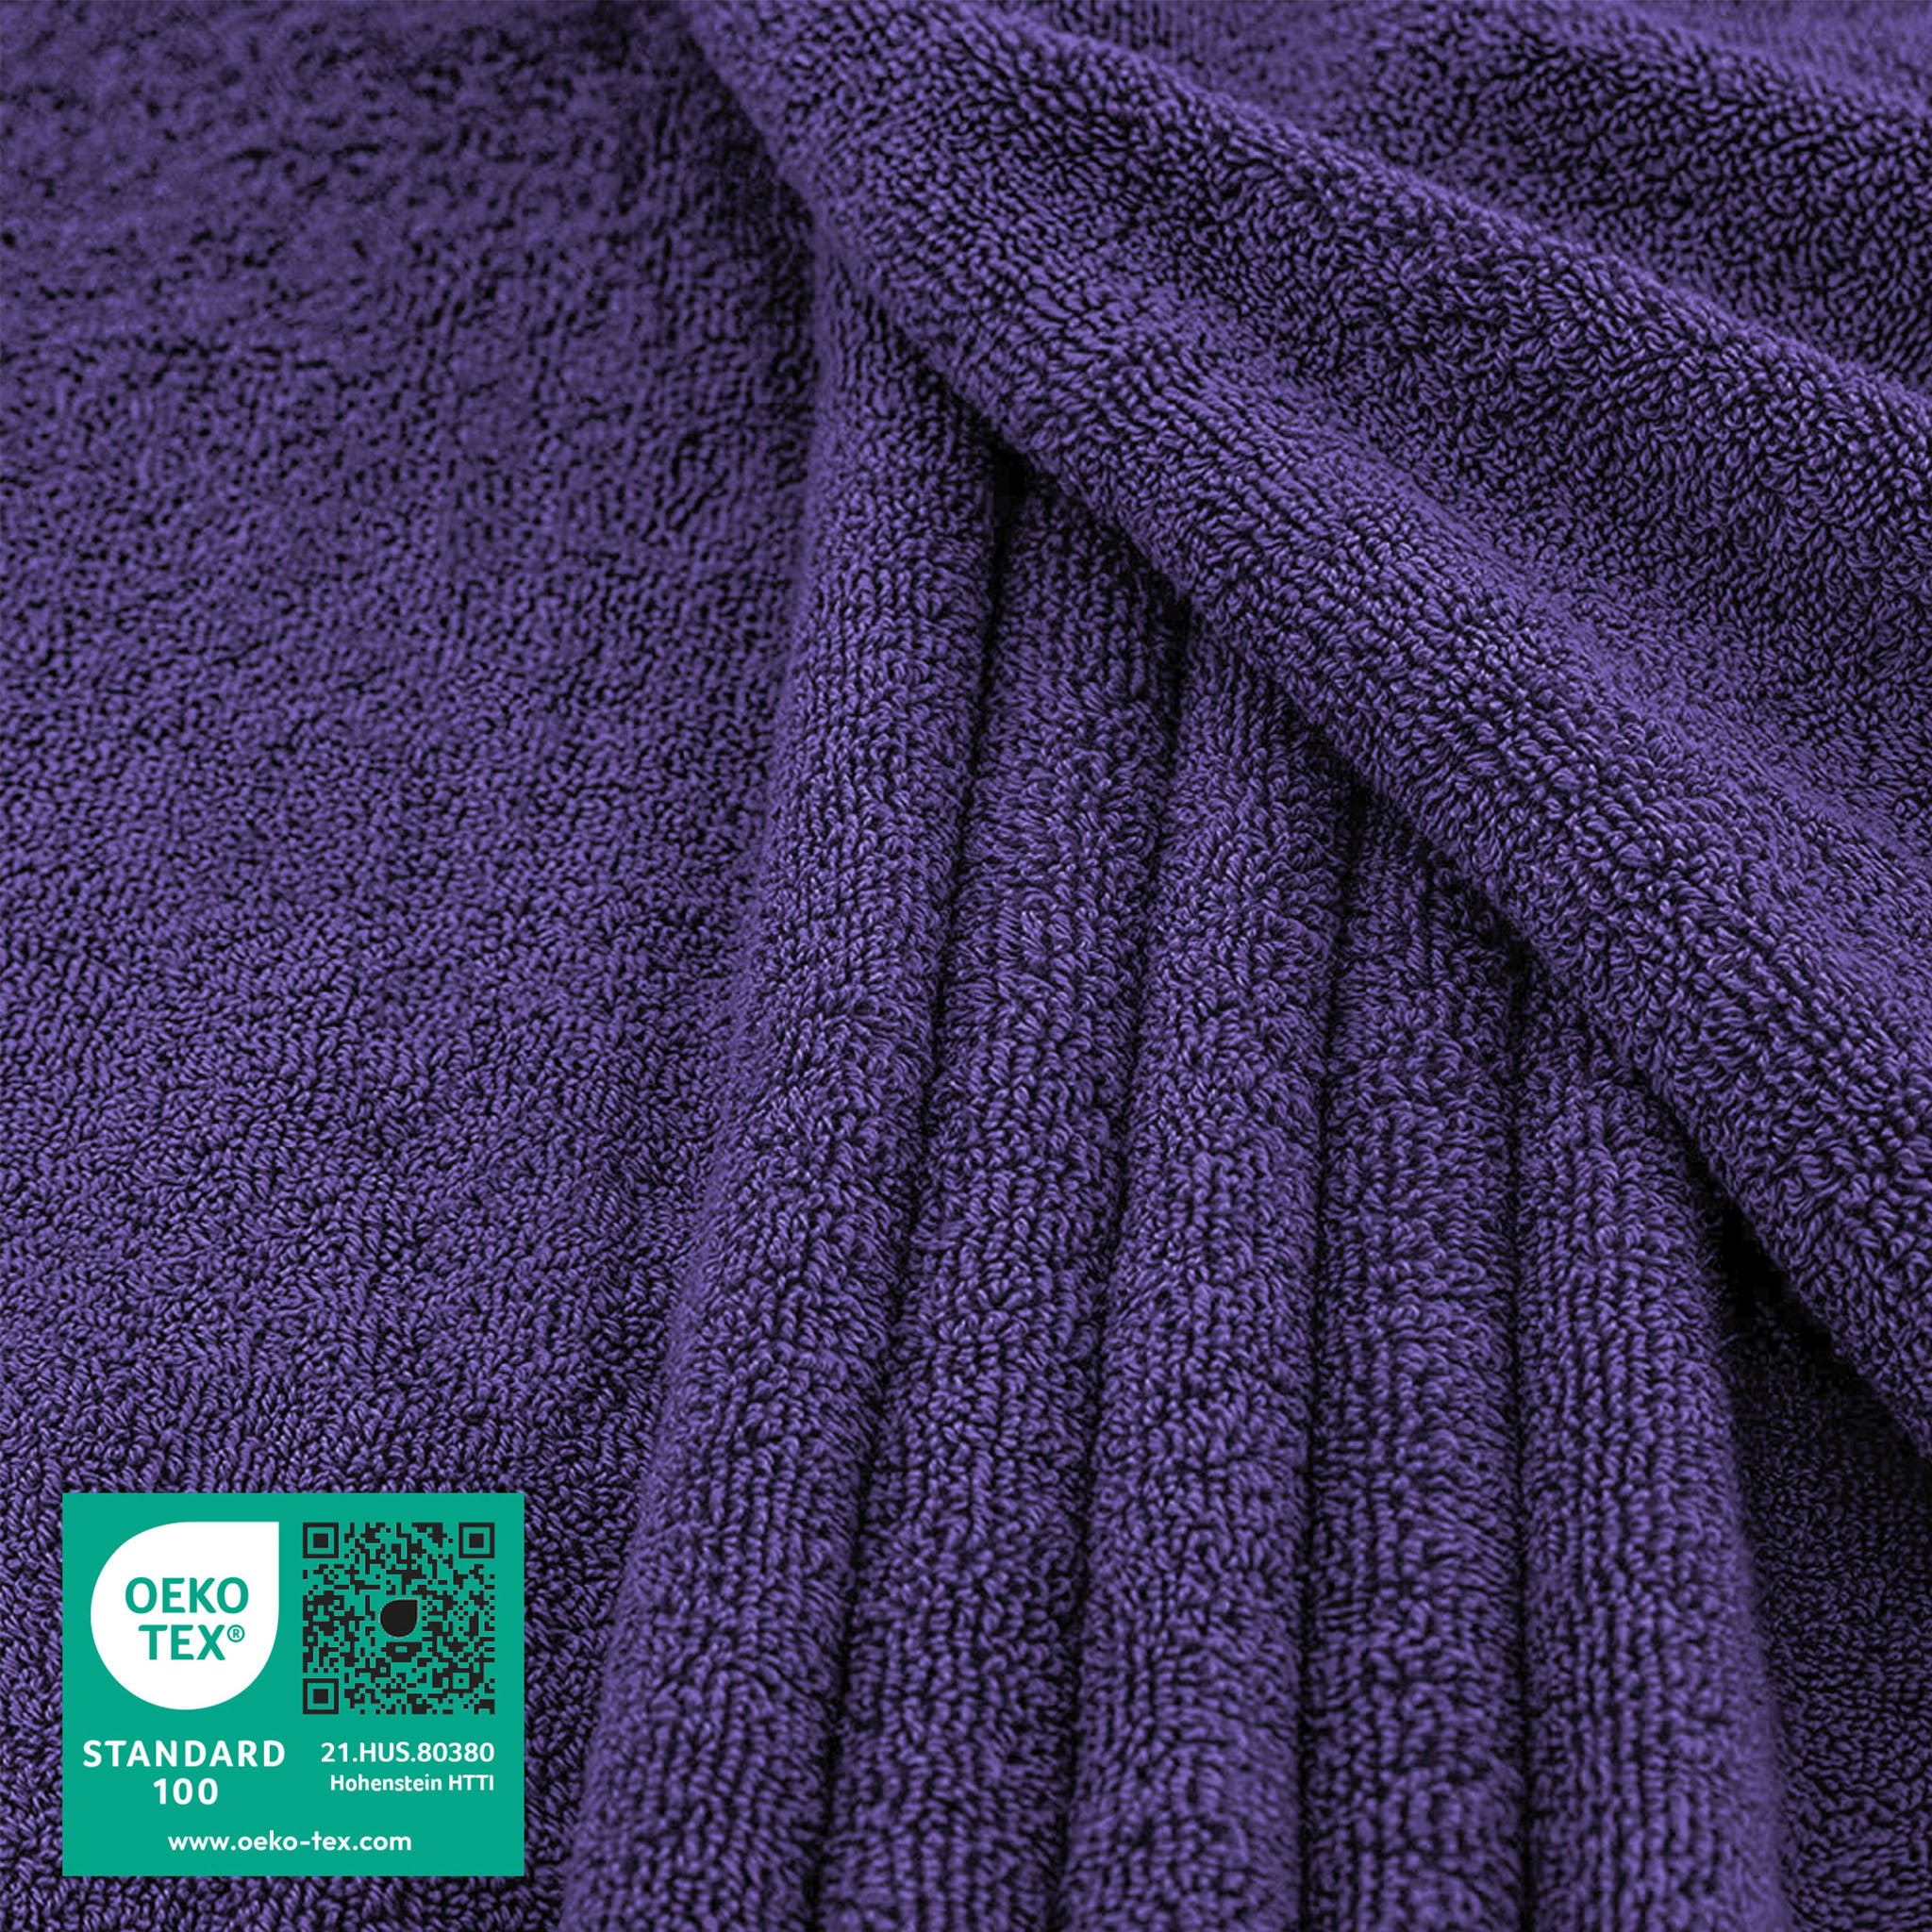 American Soft Linen 100% Ring Spun Cotton 40x80 Inches Oversized Bath Sheets purple-2